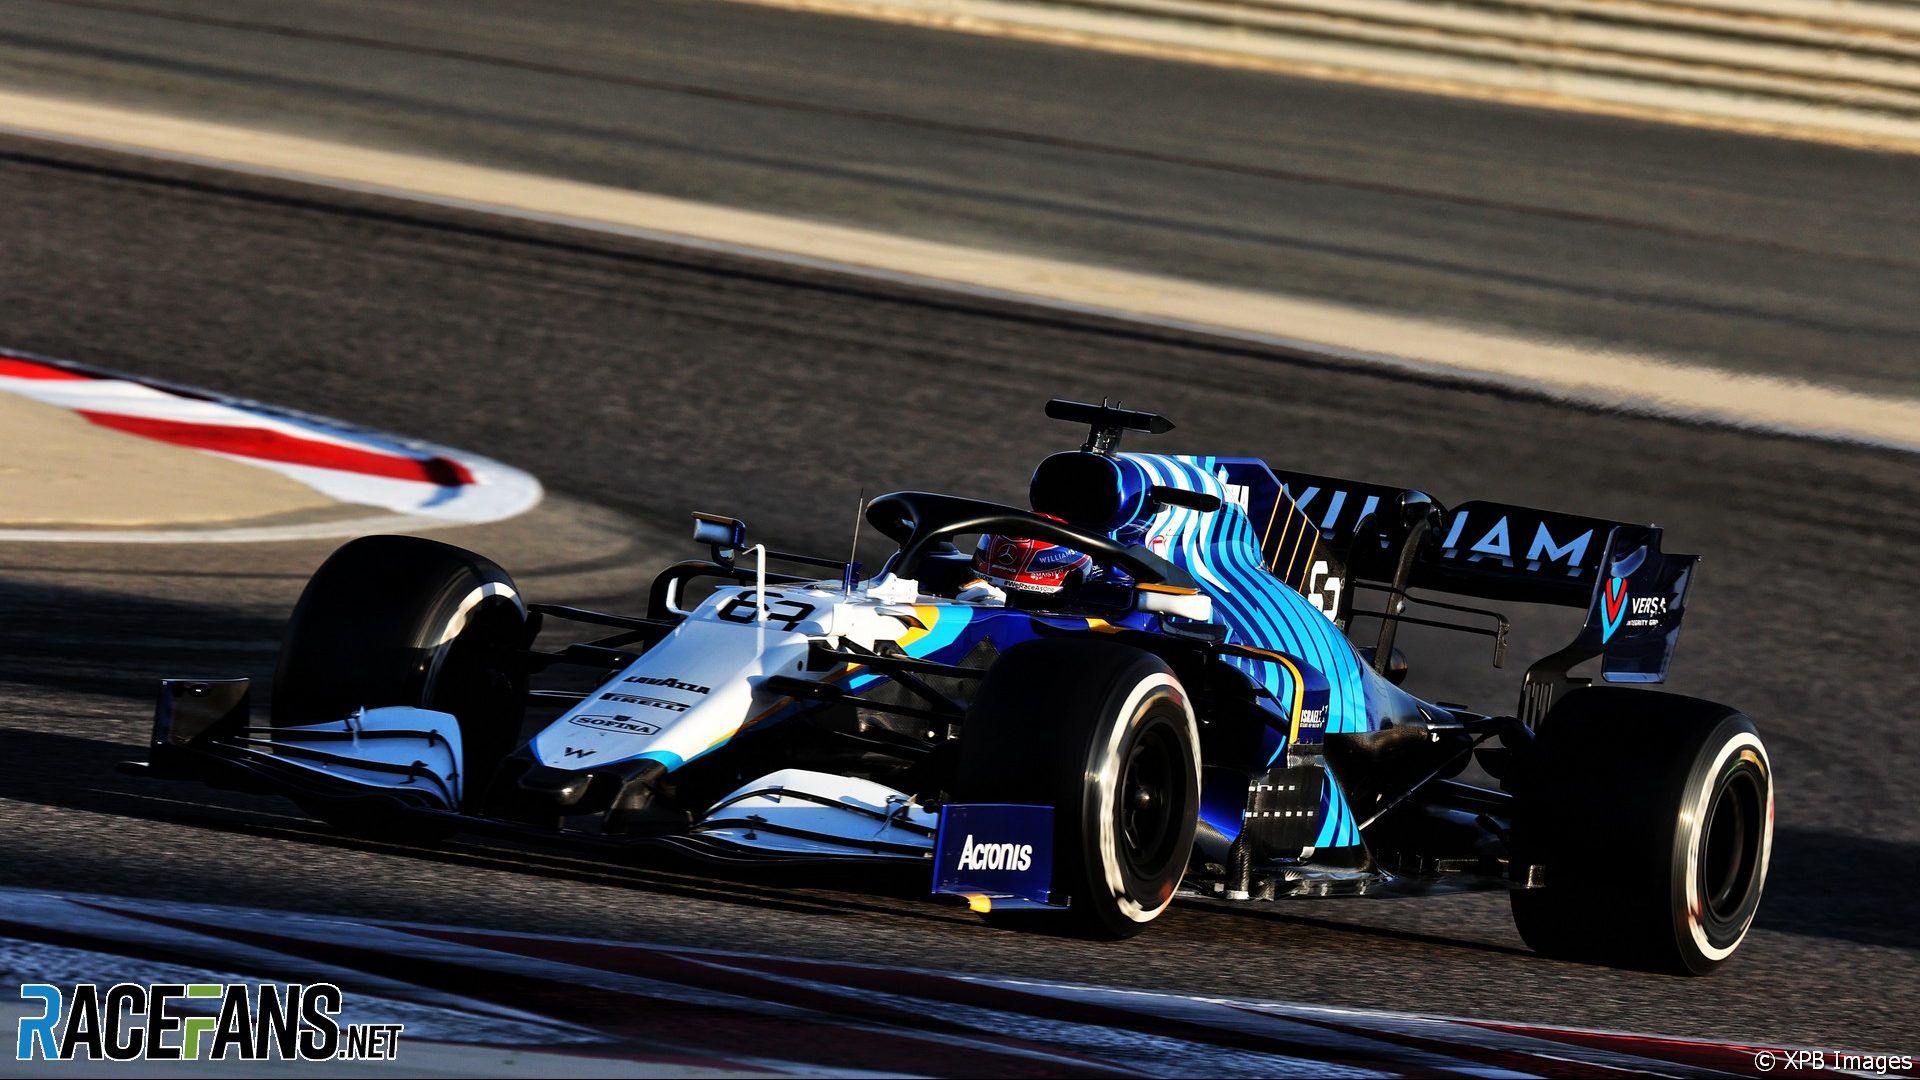 George Russell, Williams, Bahrain International Circuit, 2021 · RaceFans